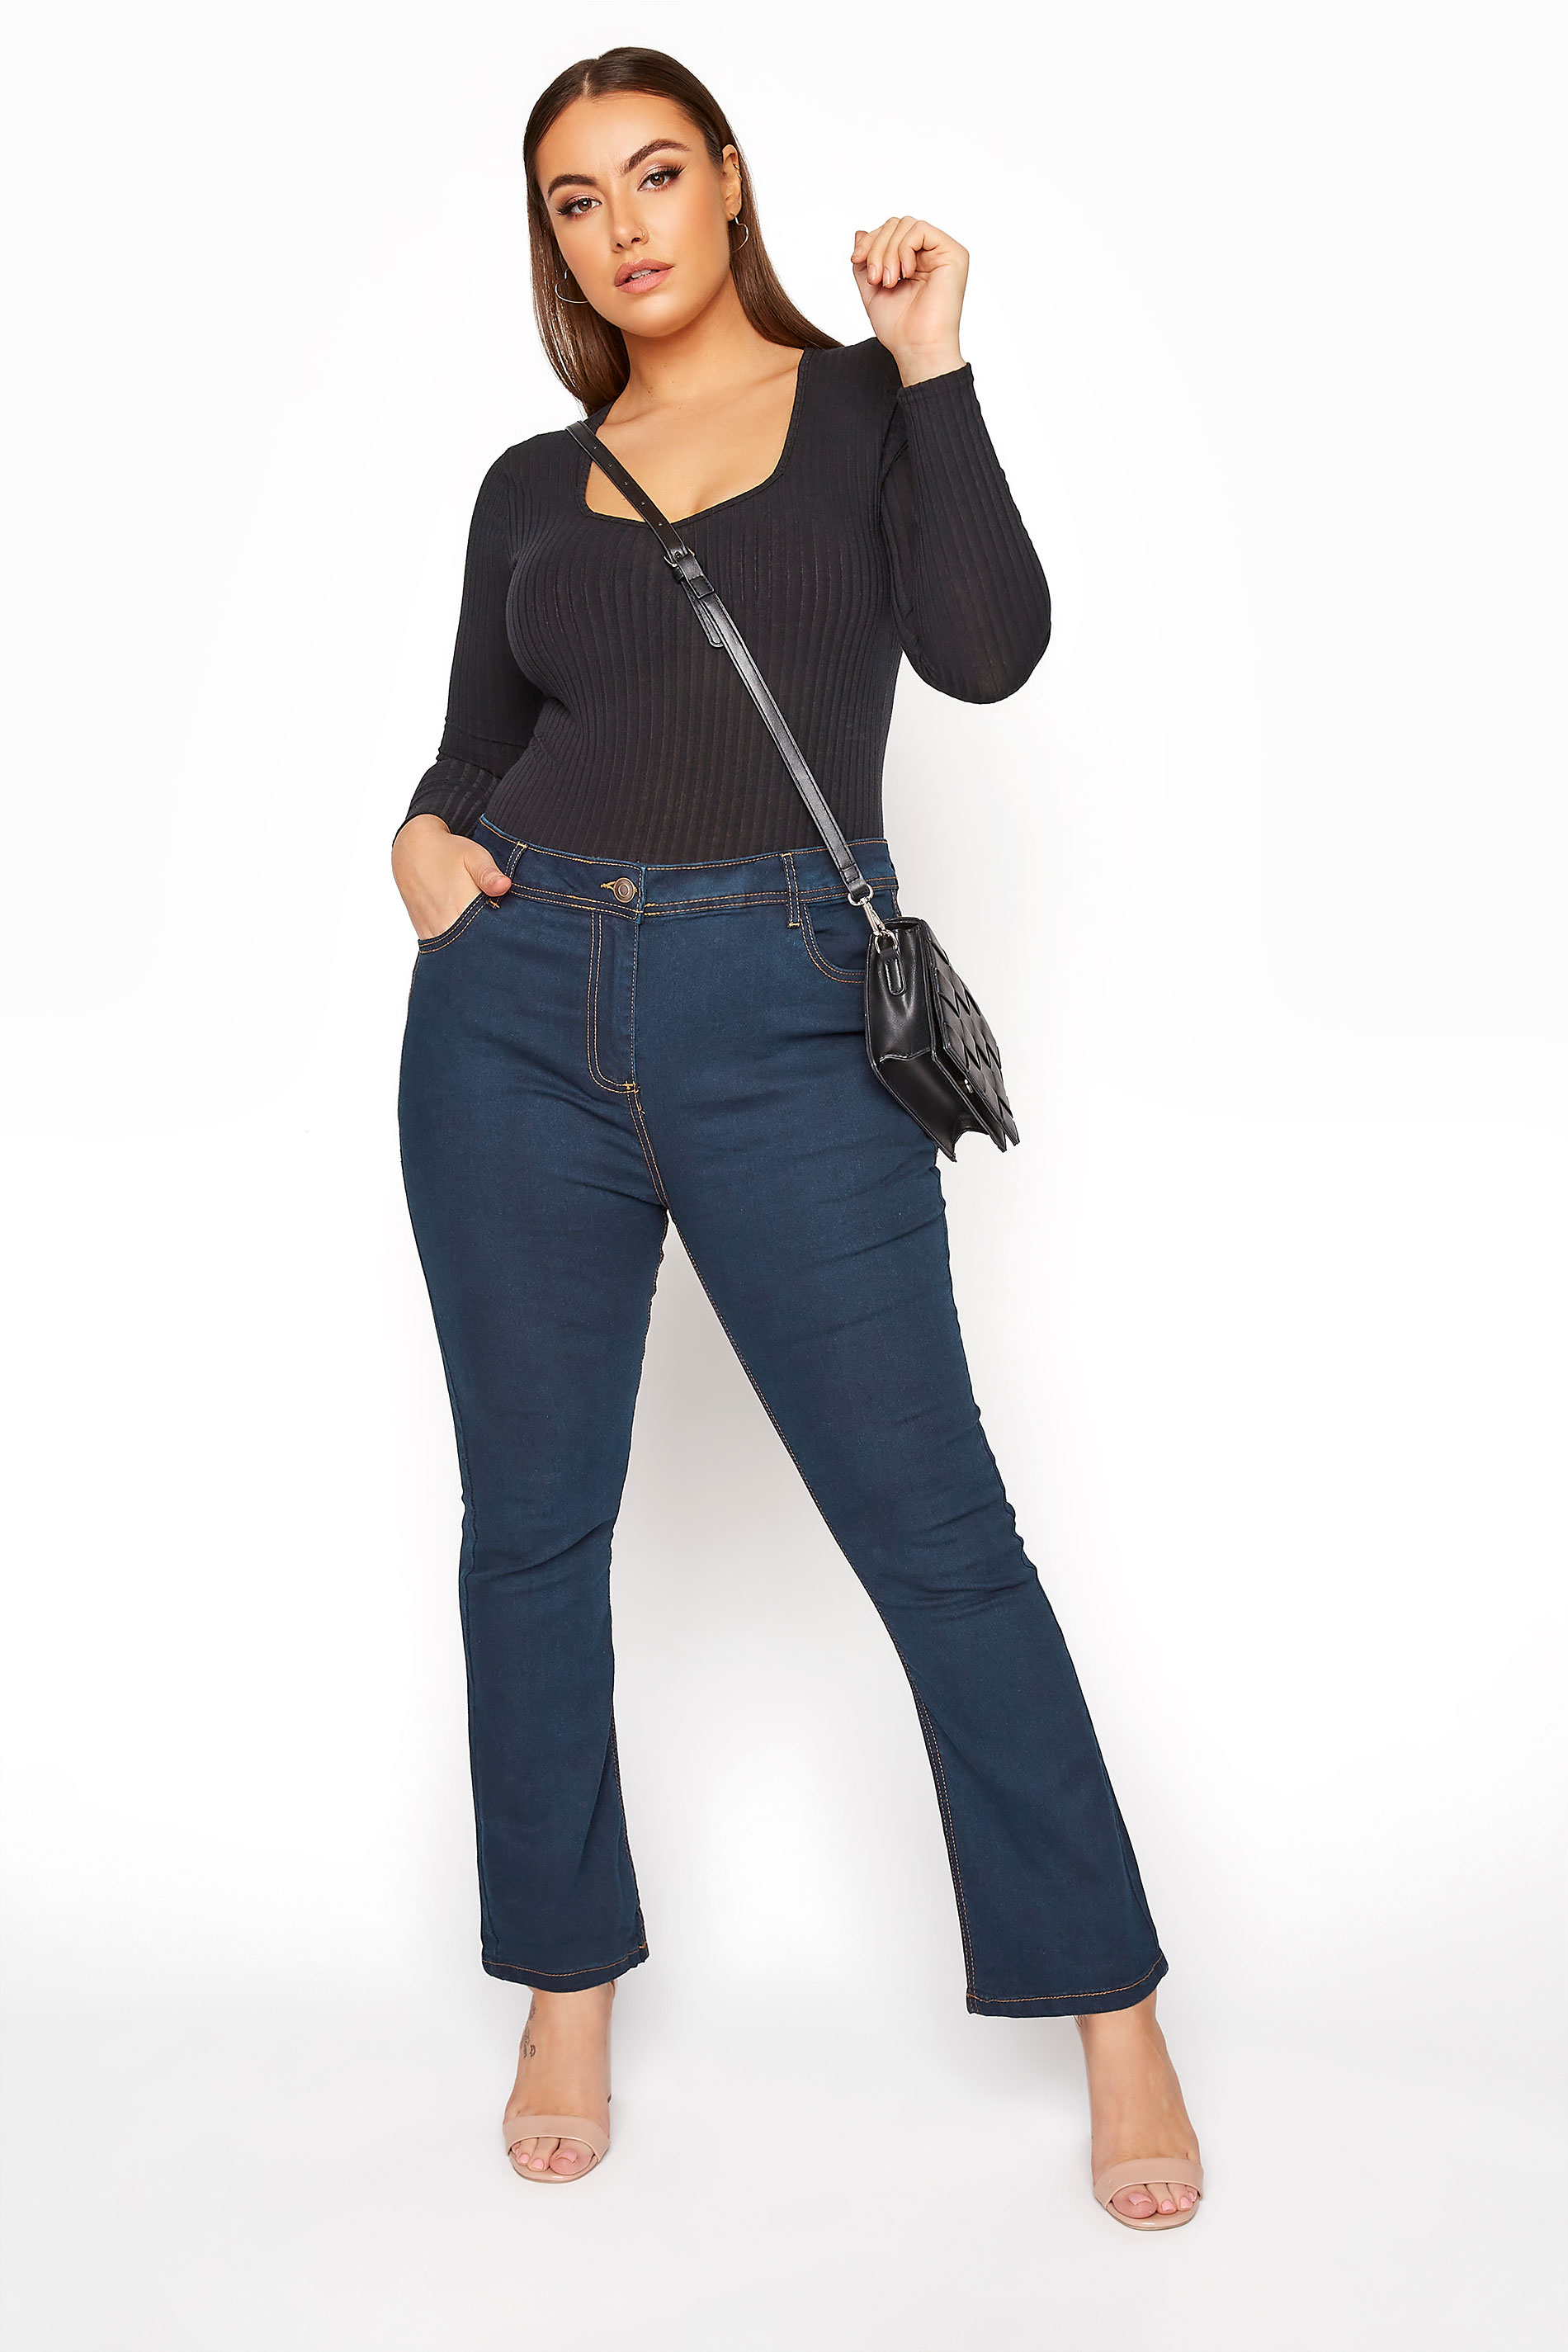 Indigo Bootcut 5 Pocket Denim Jeans Plus Size 16 to 32